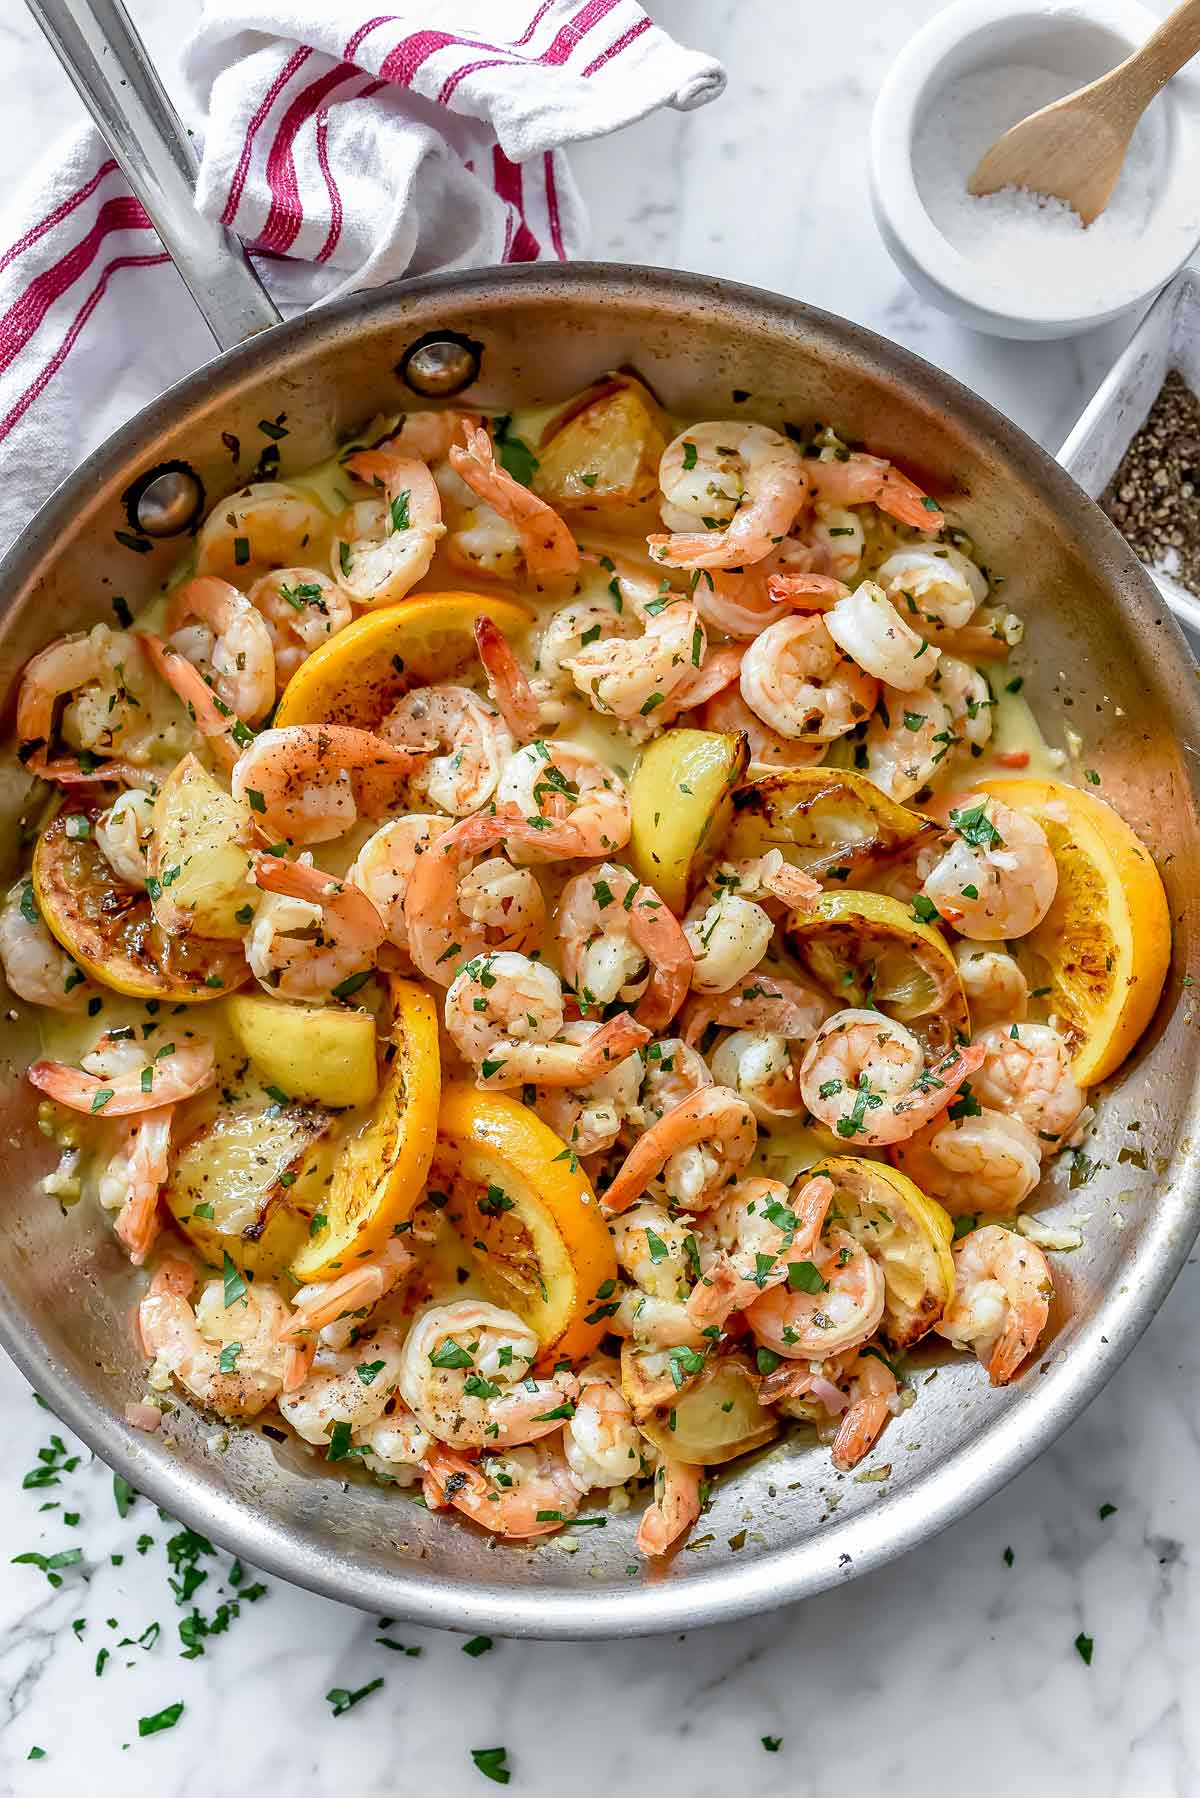 Citrus Pan Seared Shrimp Recipe Easy Shrimp Dish Foodiecrush Com,Steaming Green Beans For Freezing